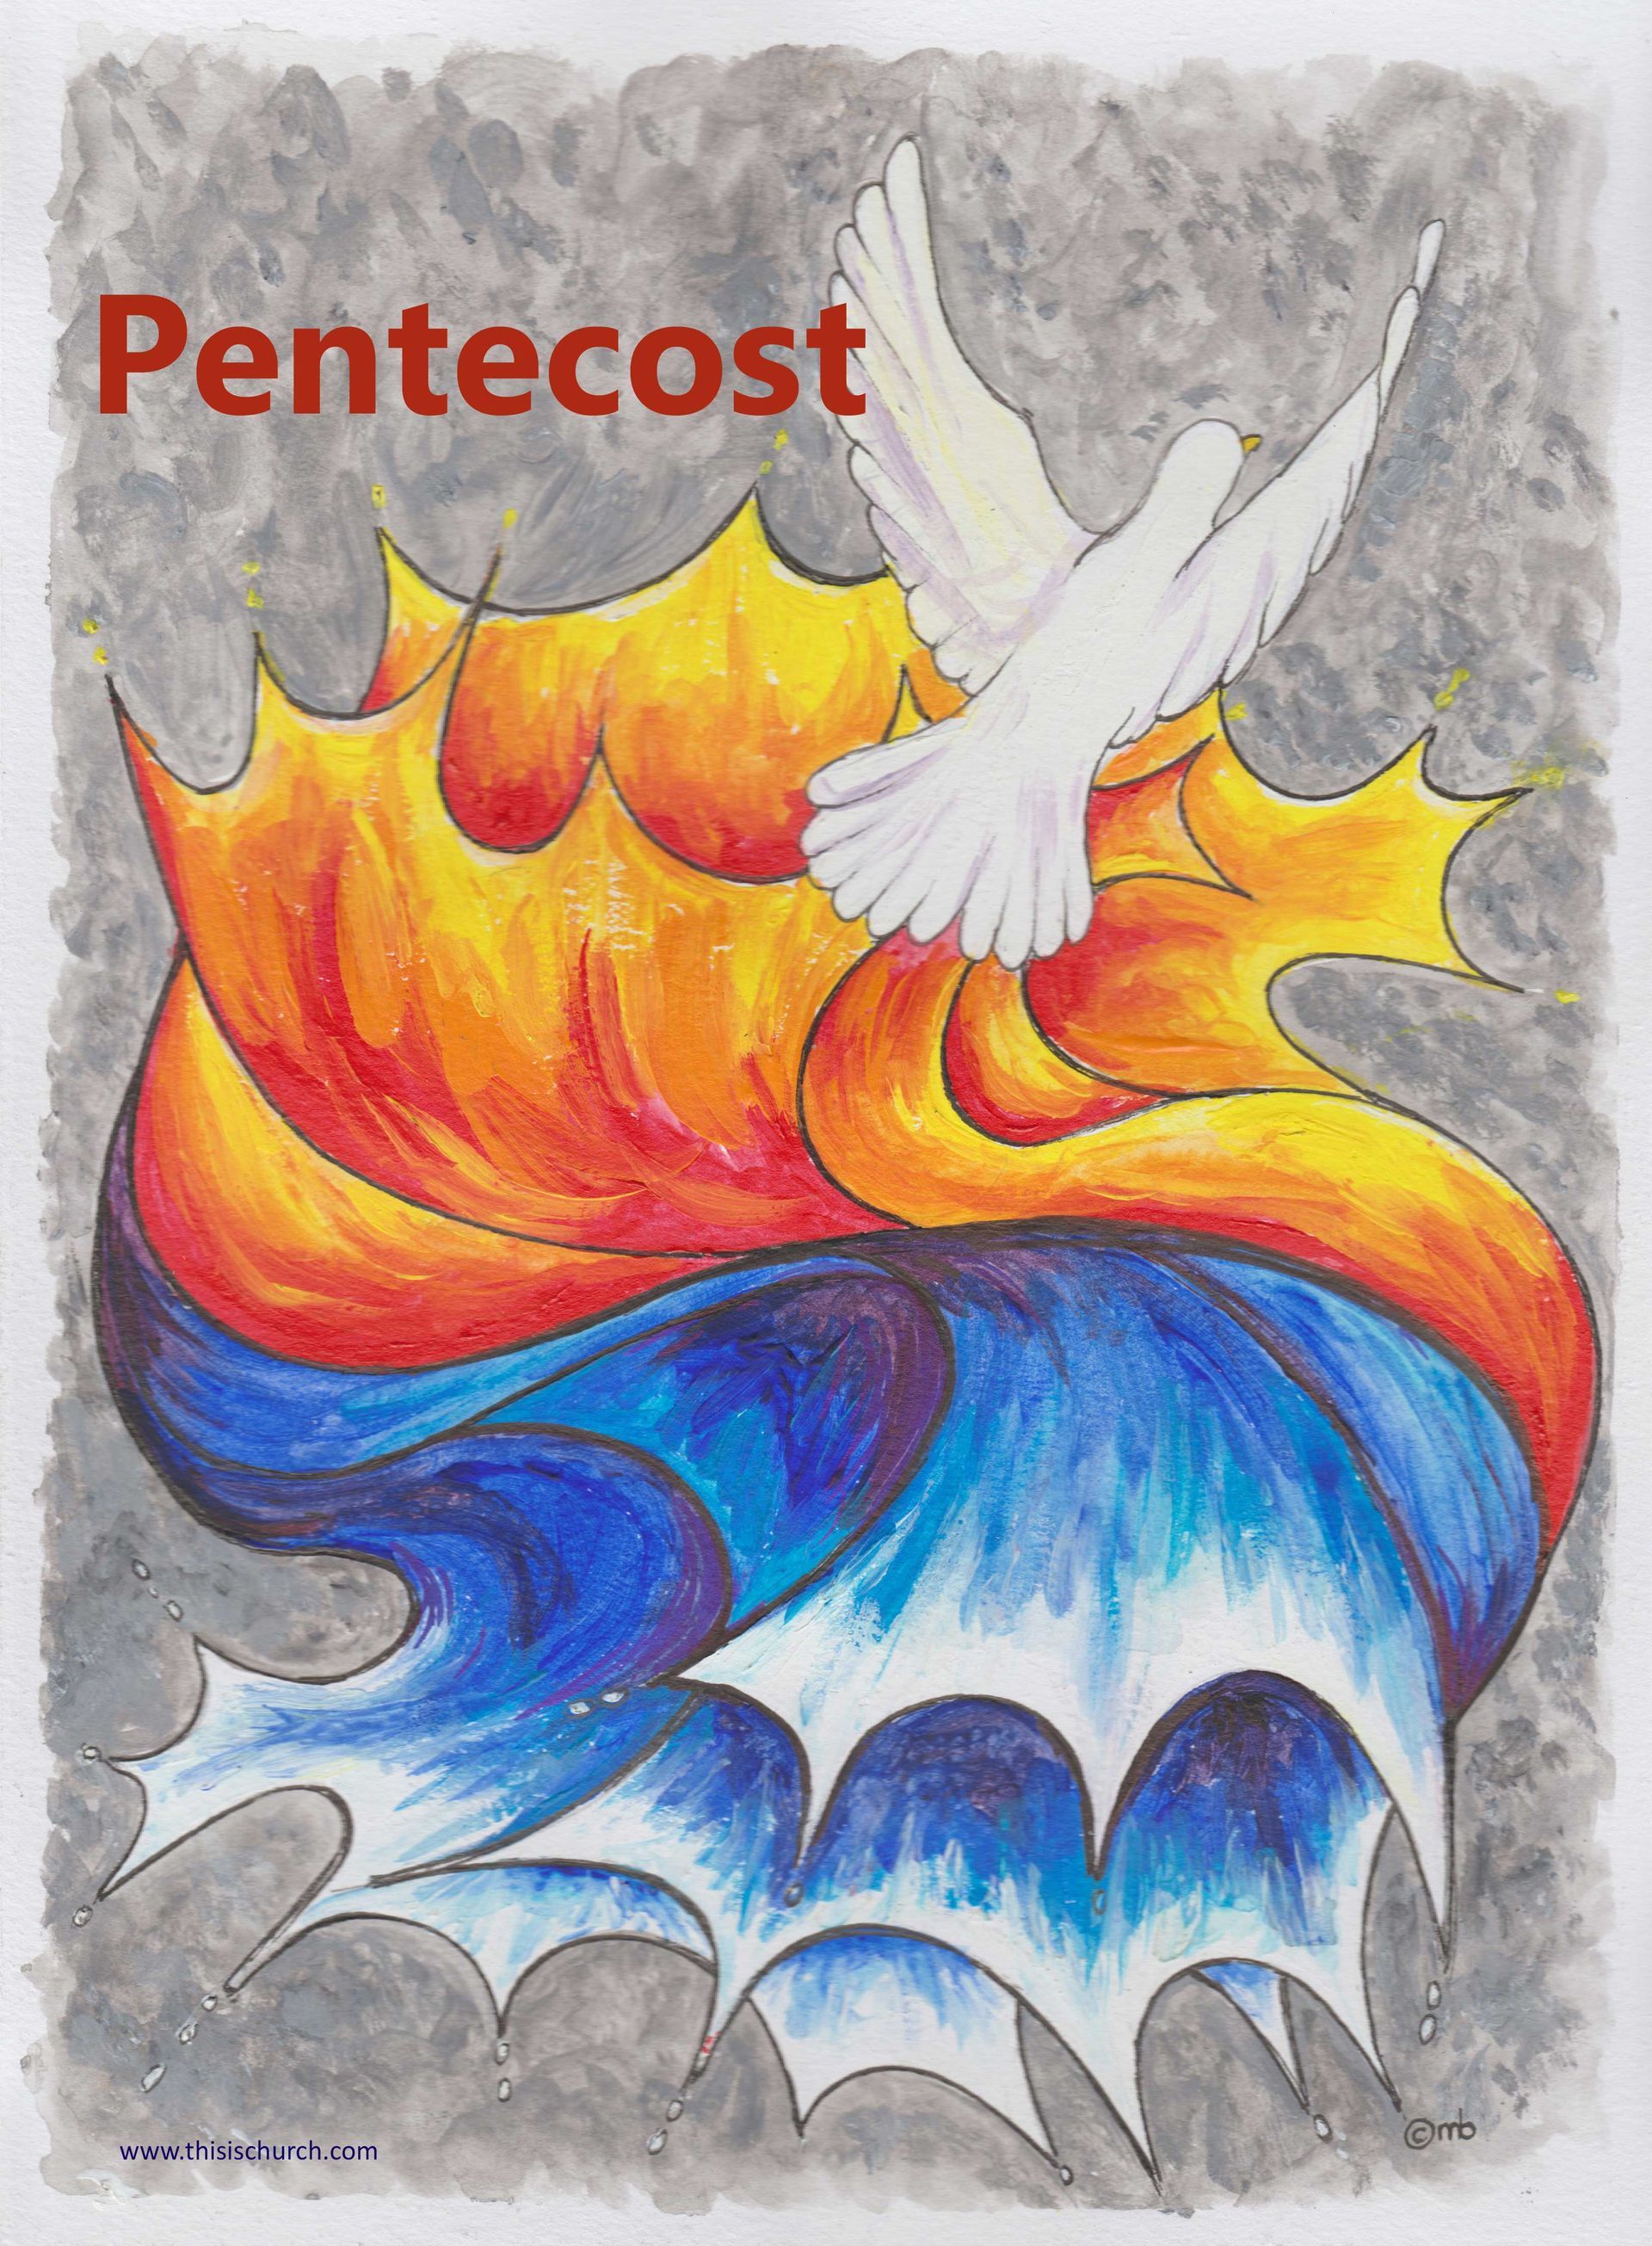 Pentecost symbol 